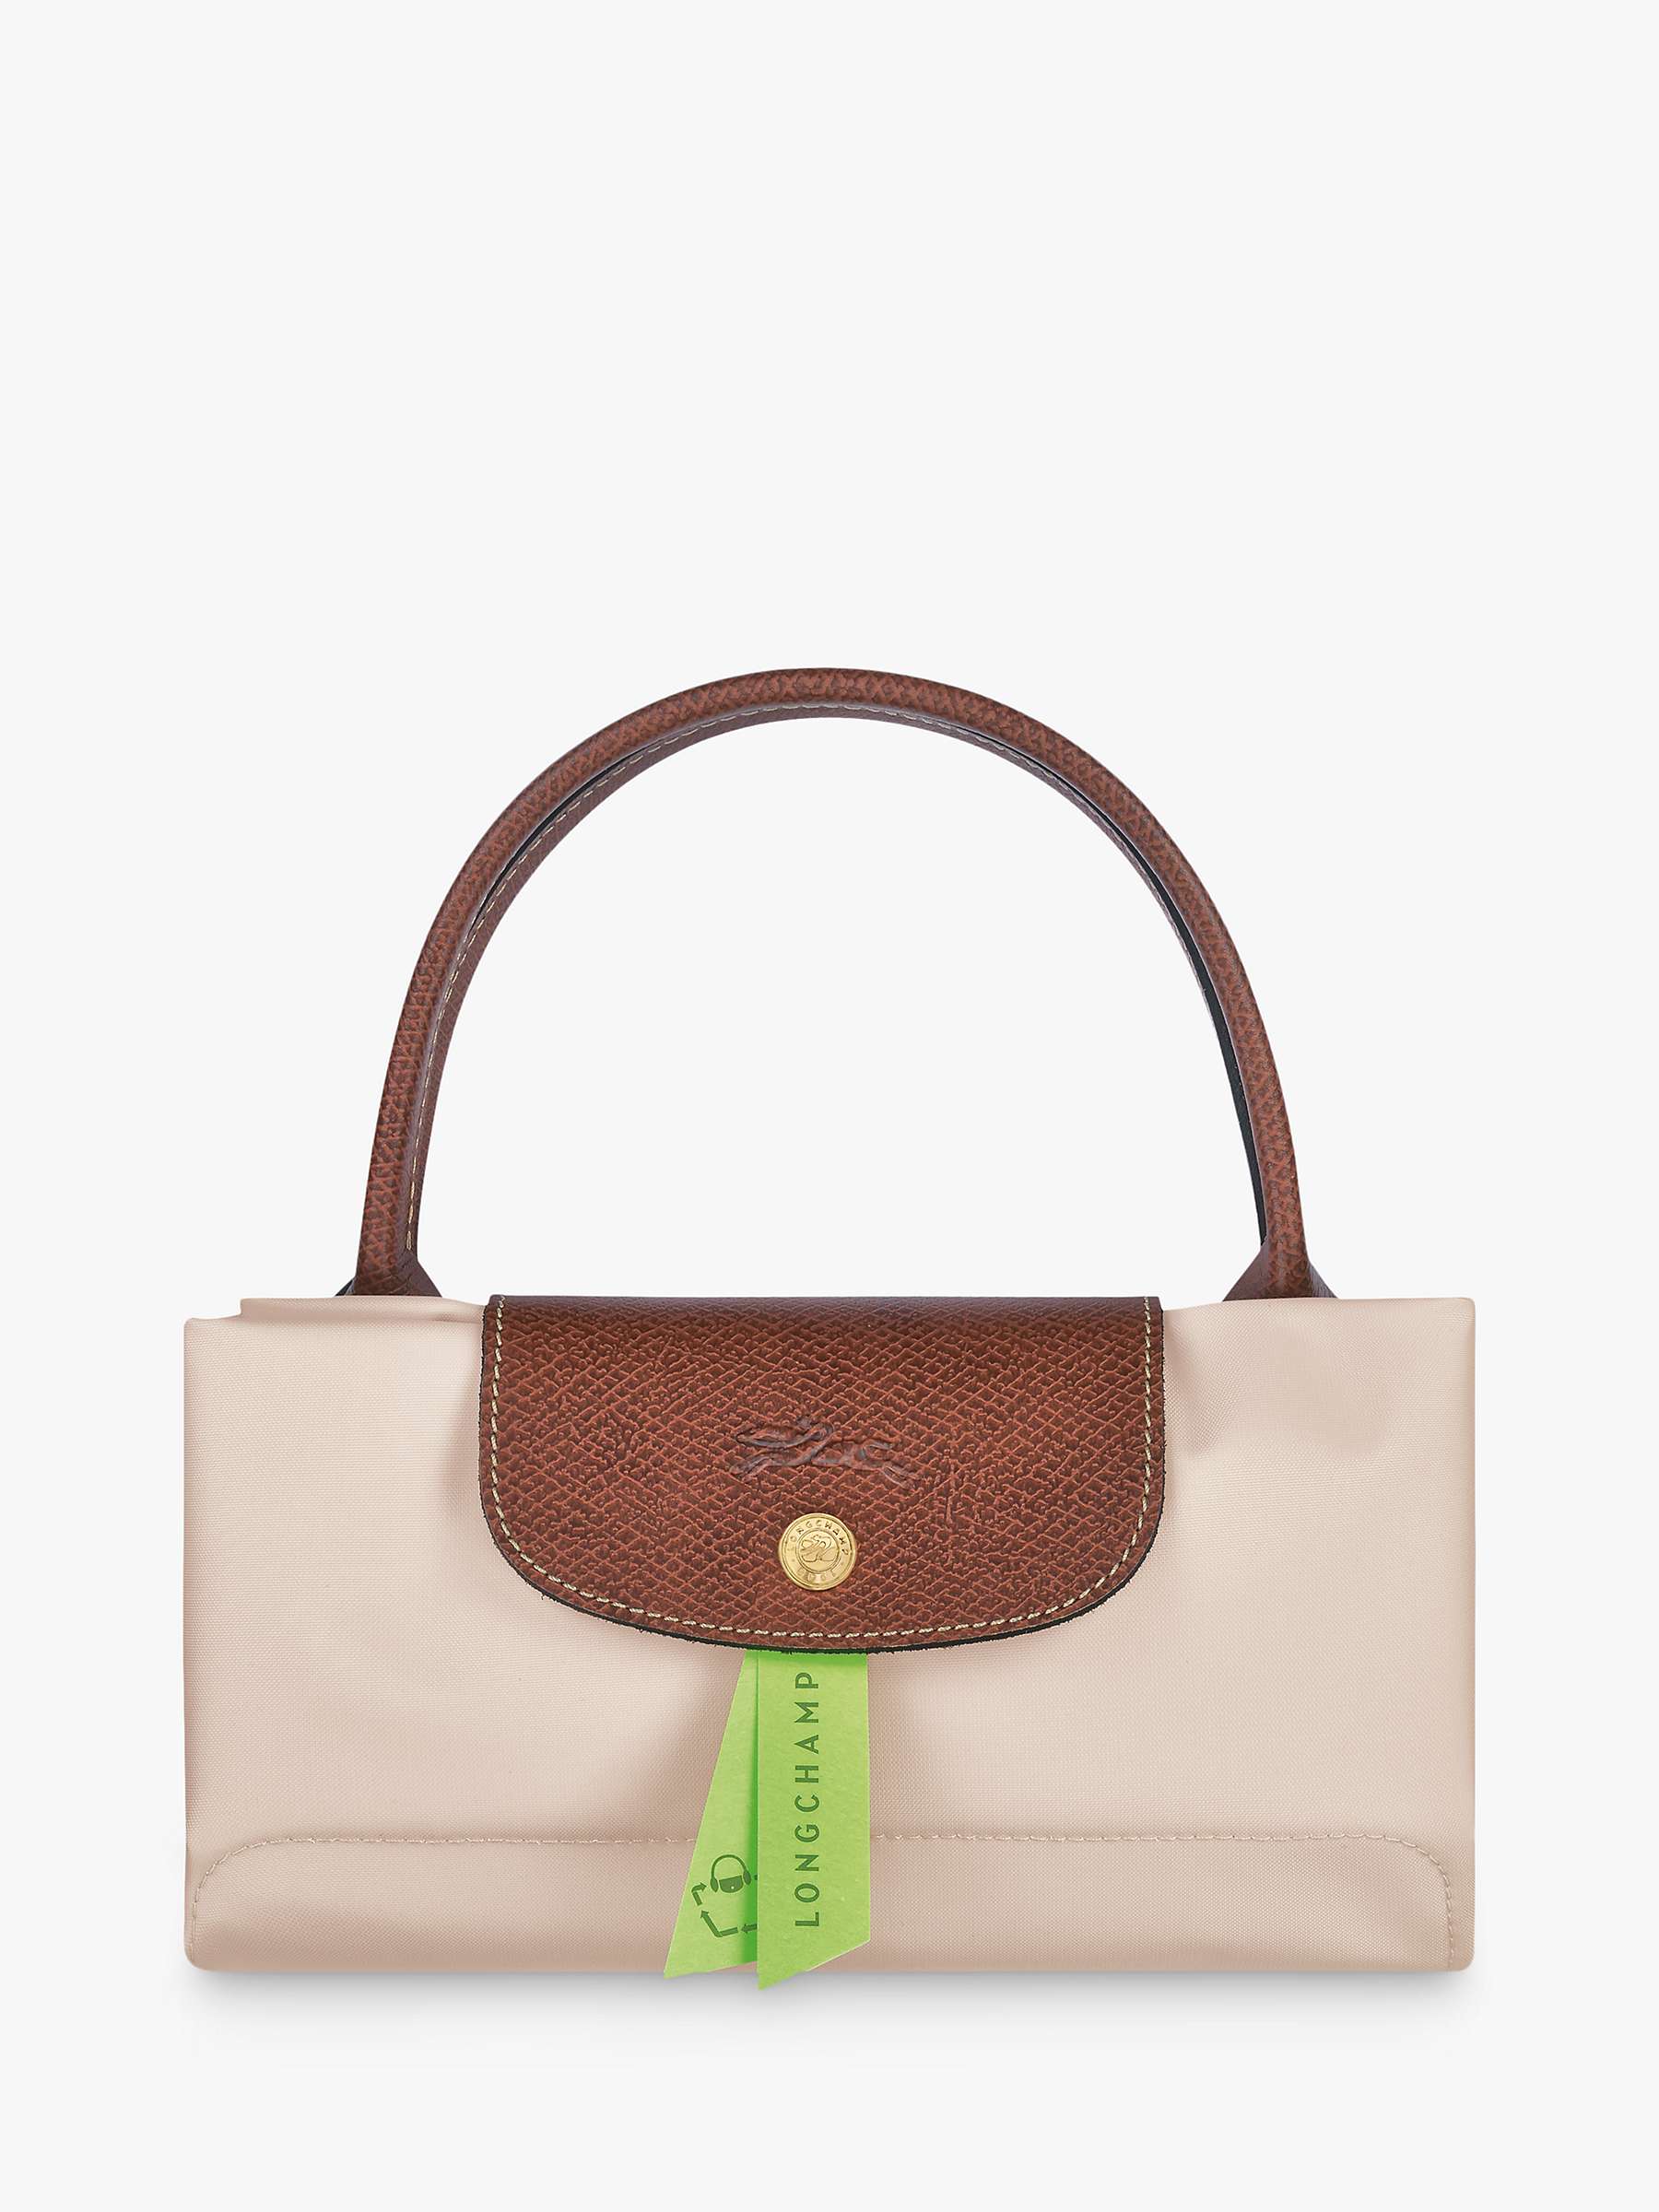 Buy Longchamp Le Pliage Original Medium Top Handle Bag Online at johnlewis.com